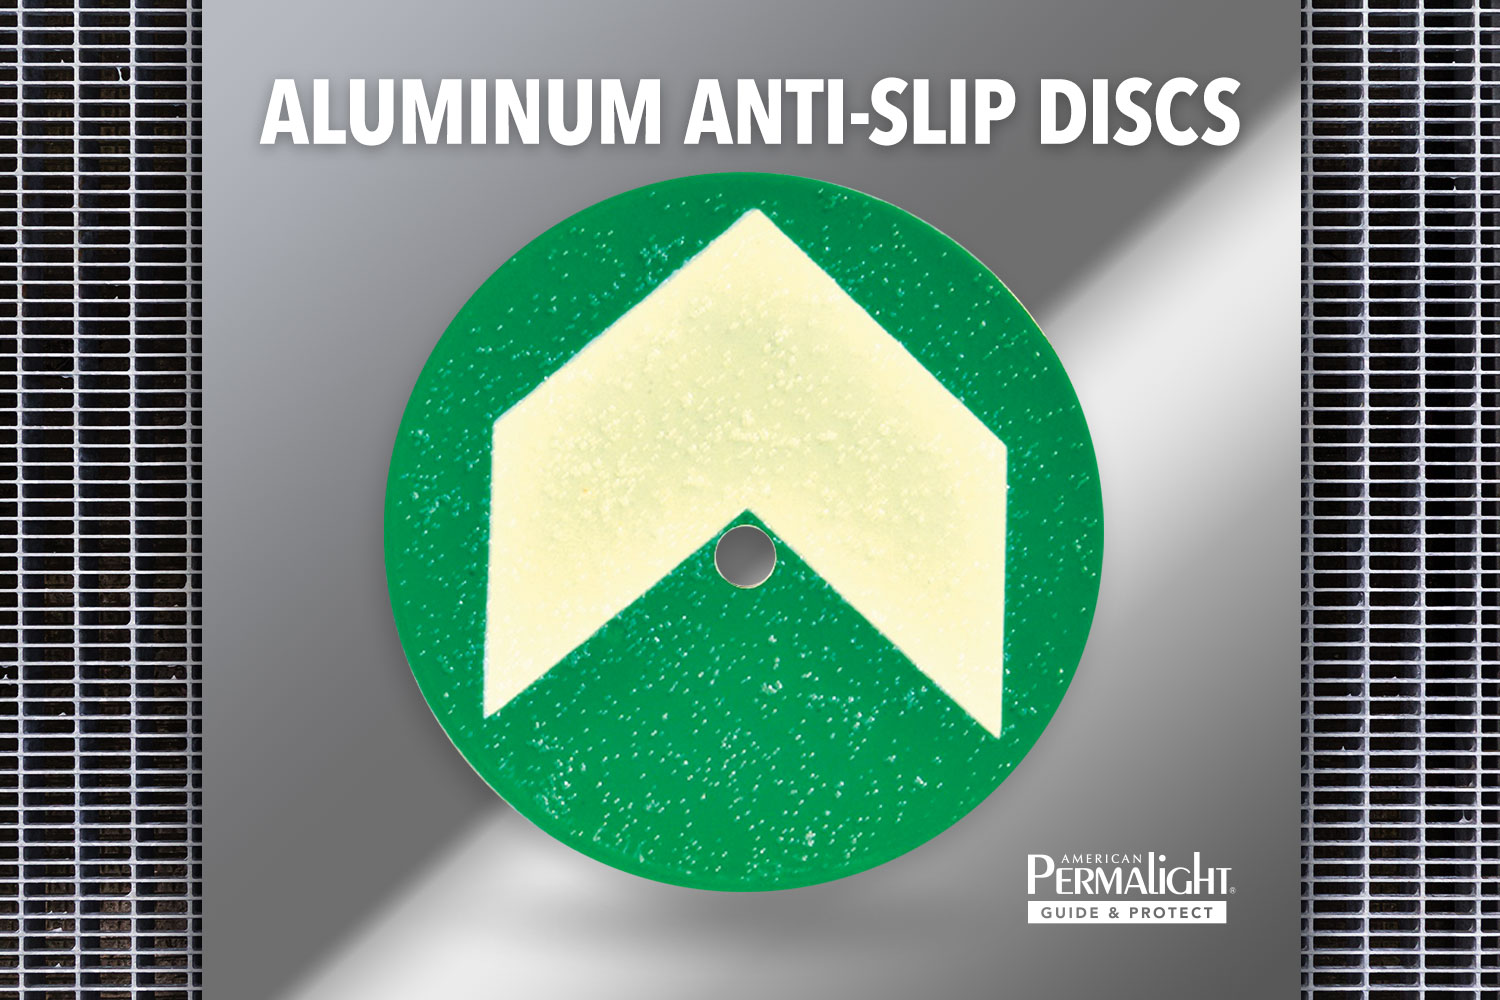 PERMALIGHT® Aluminum Anti-Slip Discs for Metal Catwalks